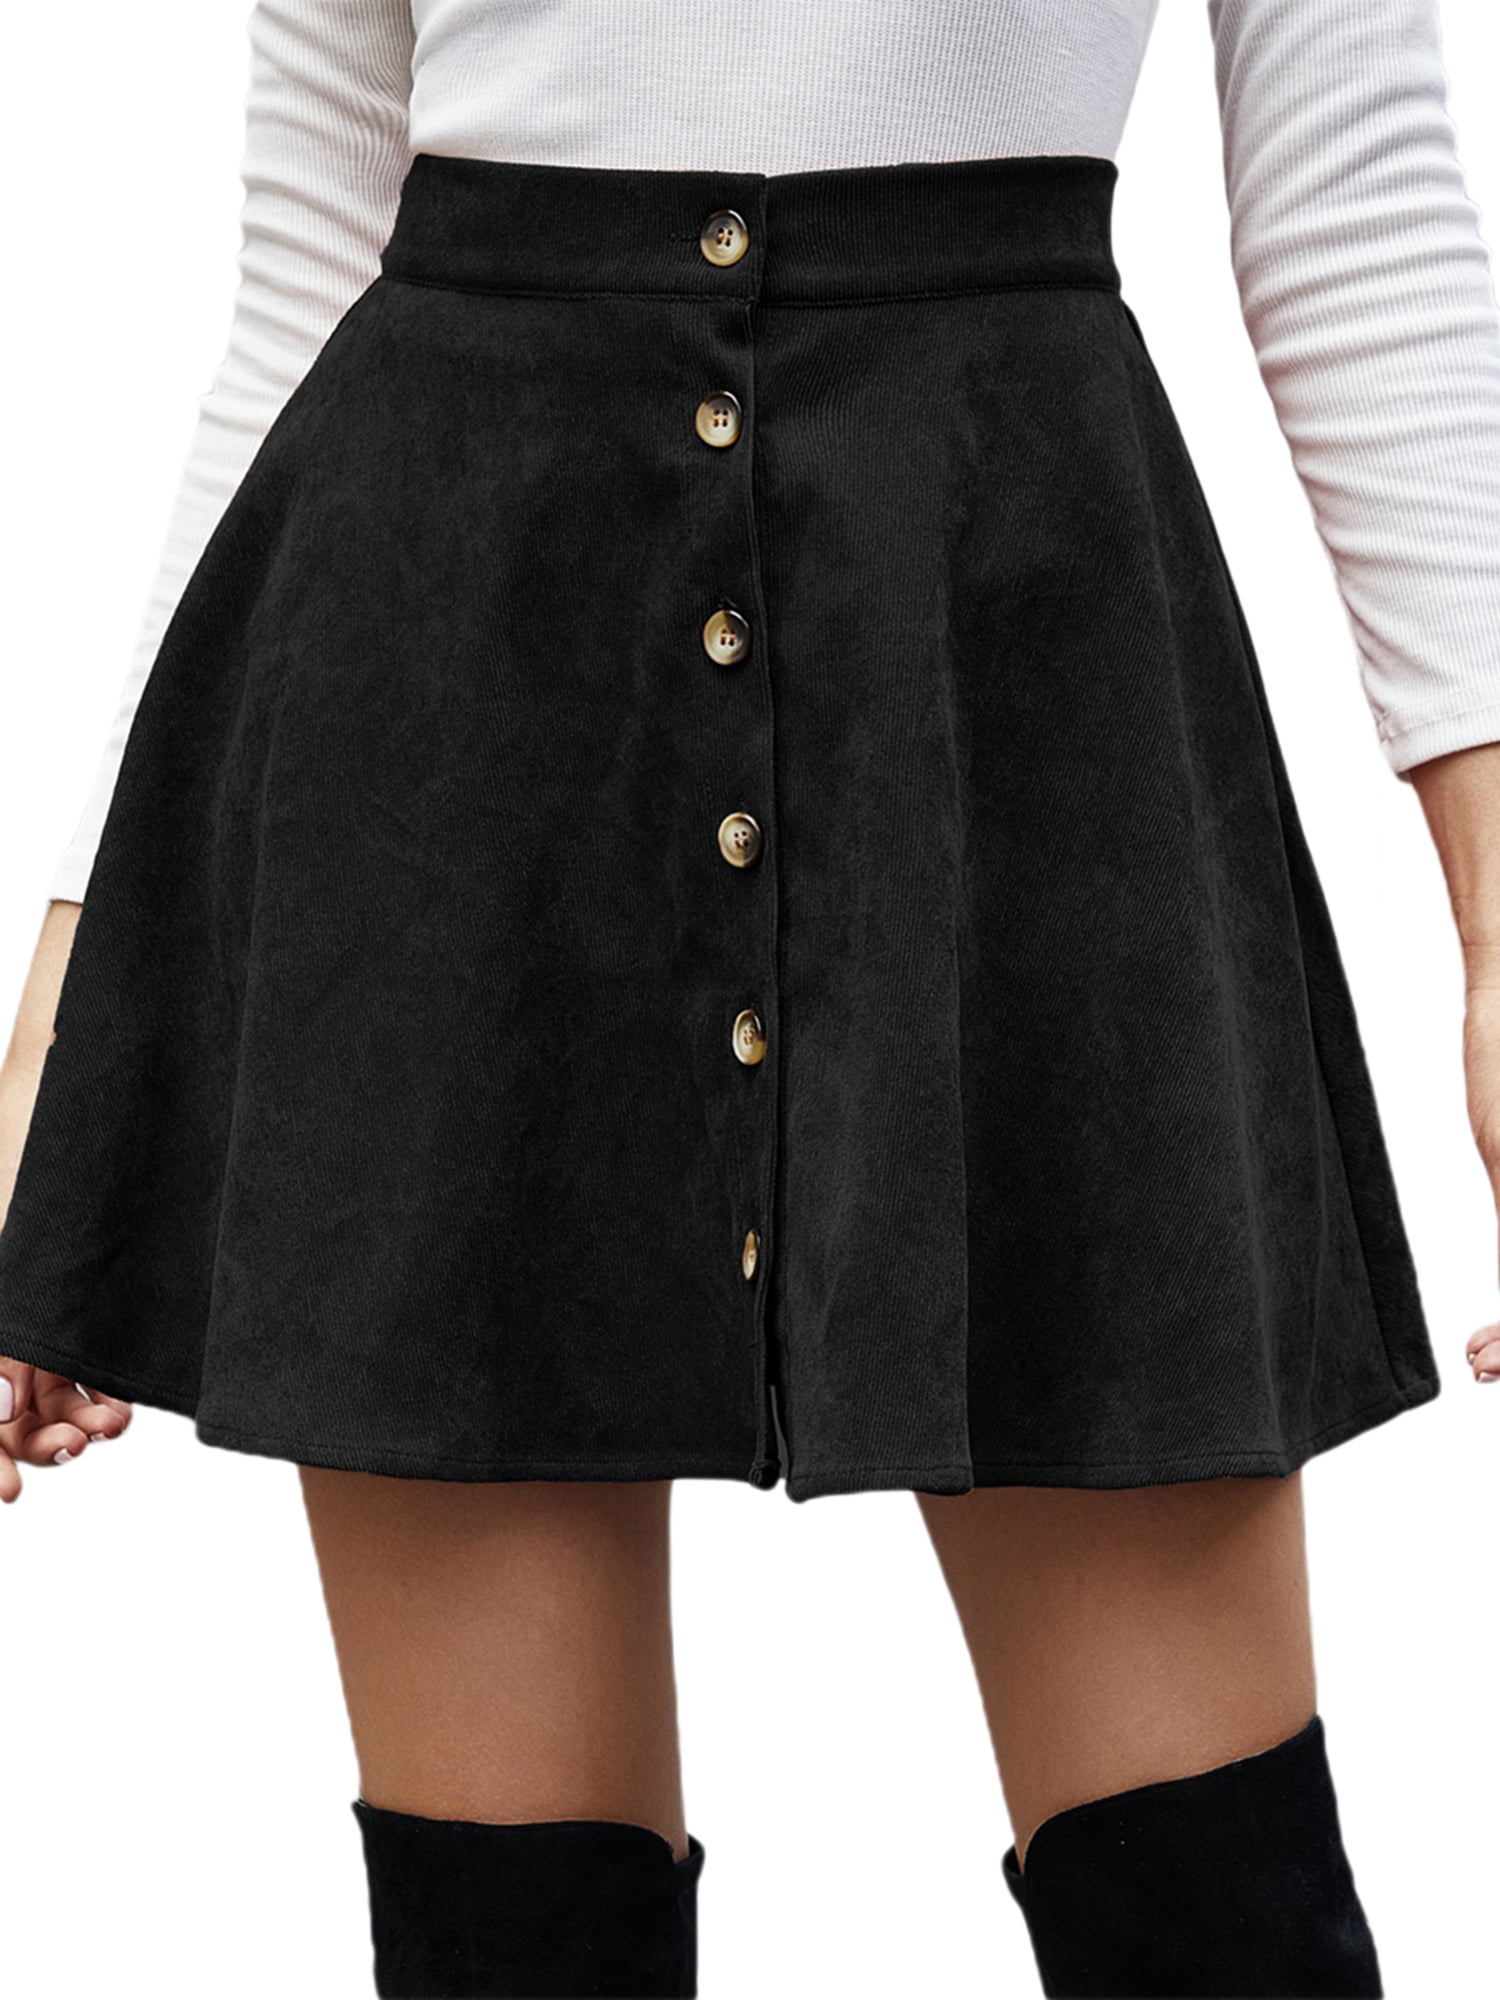 Black fitted mini skirts Eyicmarn Eyicmarn Womens Corduroy Mini Skirts High Waist Button Up Flare A Line Short Skirts Black Walmart Com Walmart Com